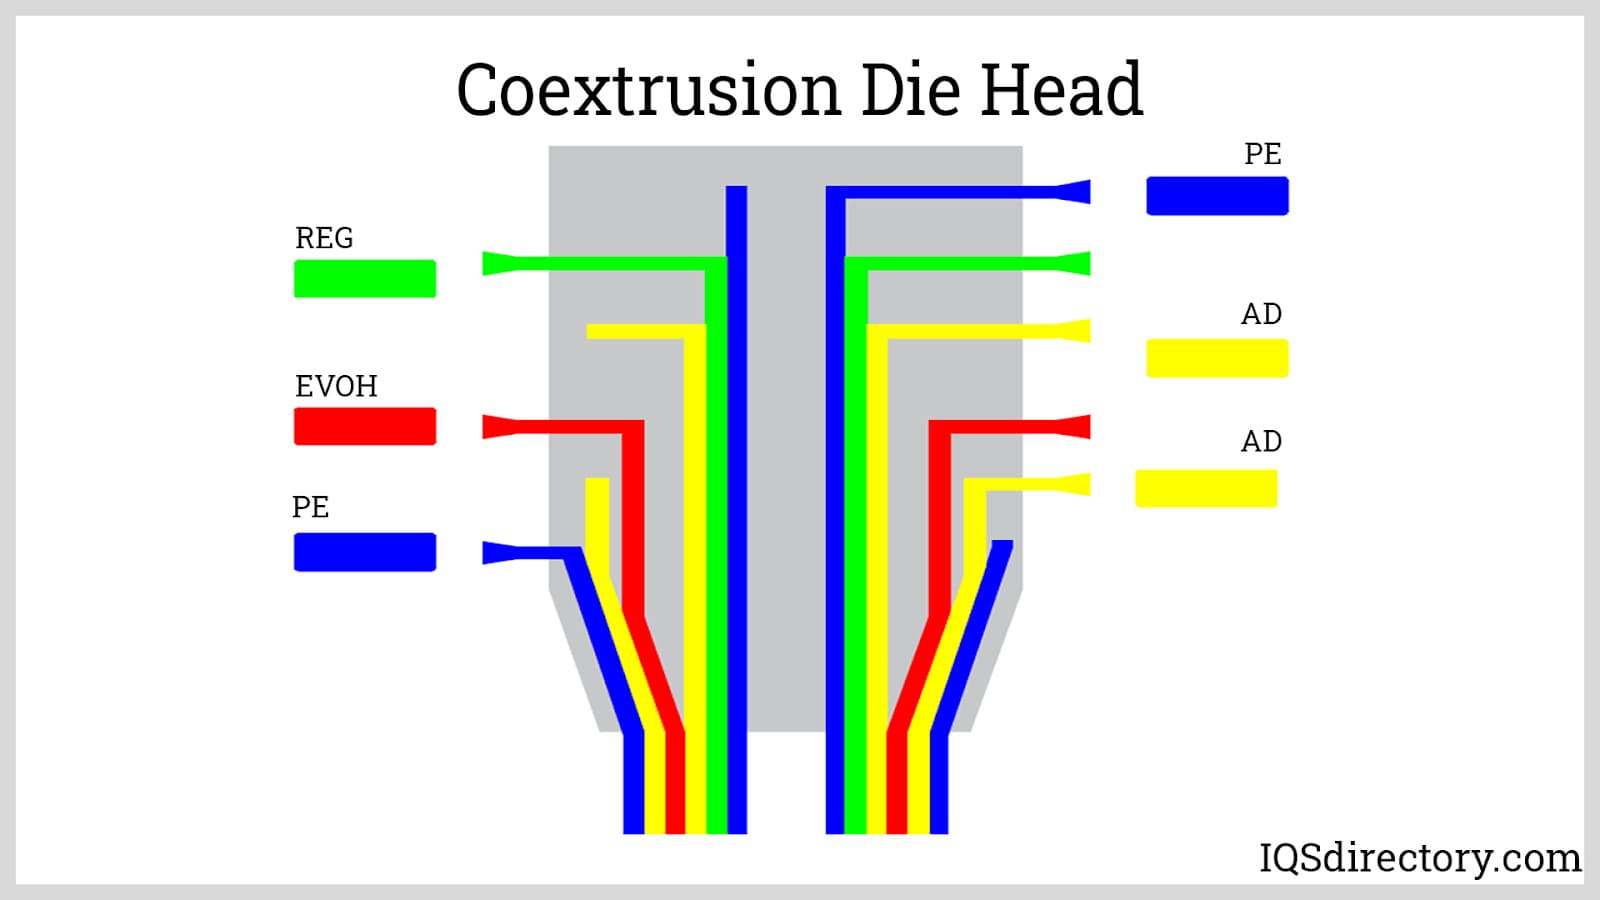 Coextrusion Die Head